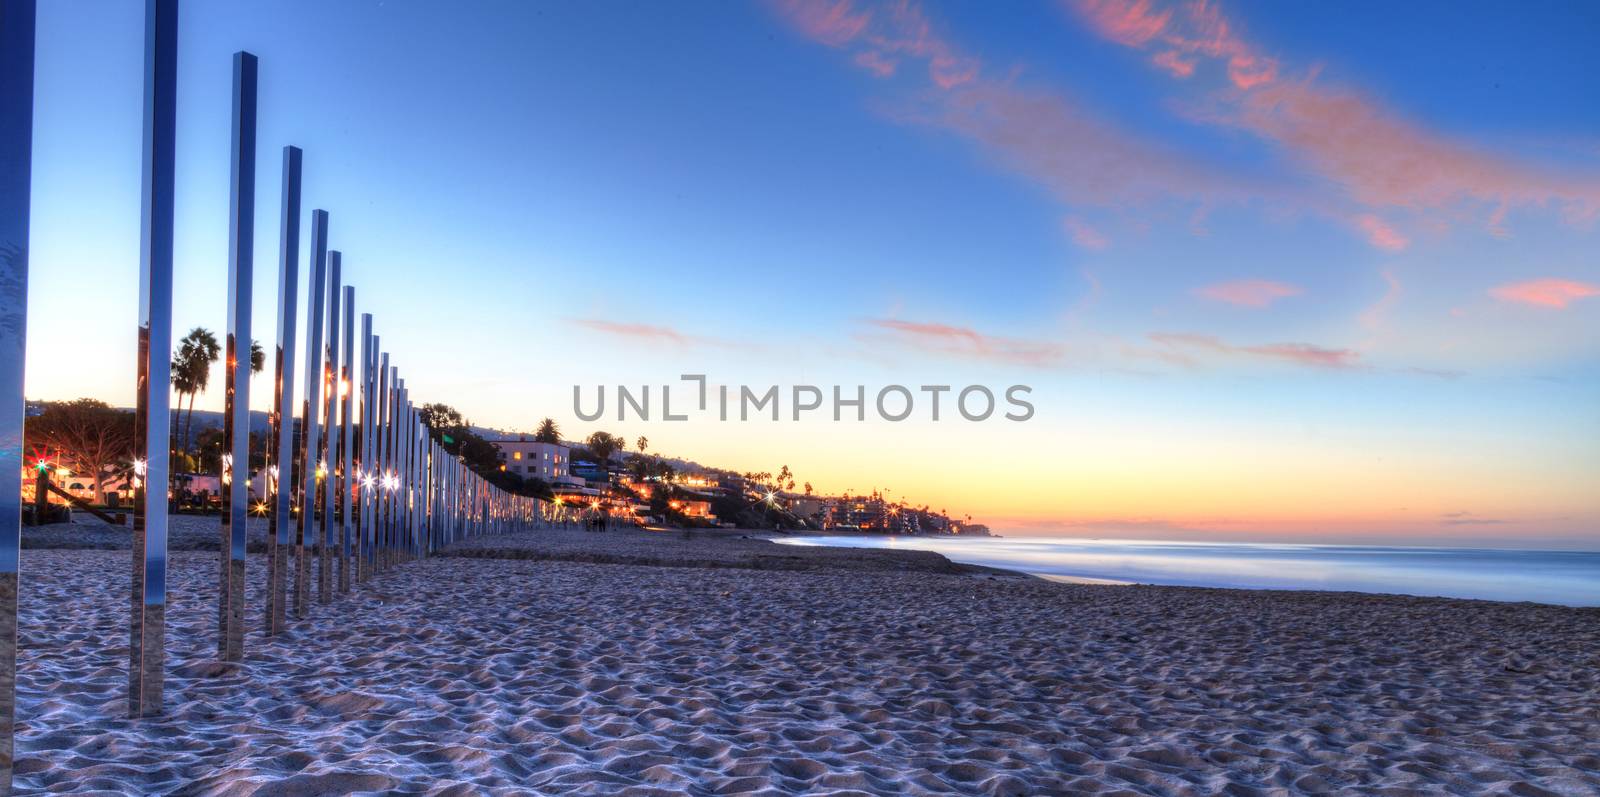 Sunrise over mirrored posts at Main Beach by steffstarr